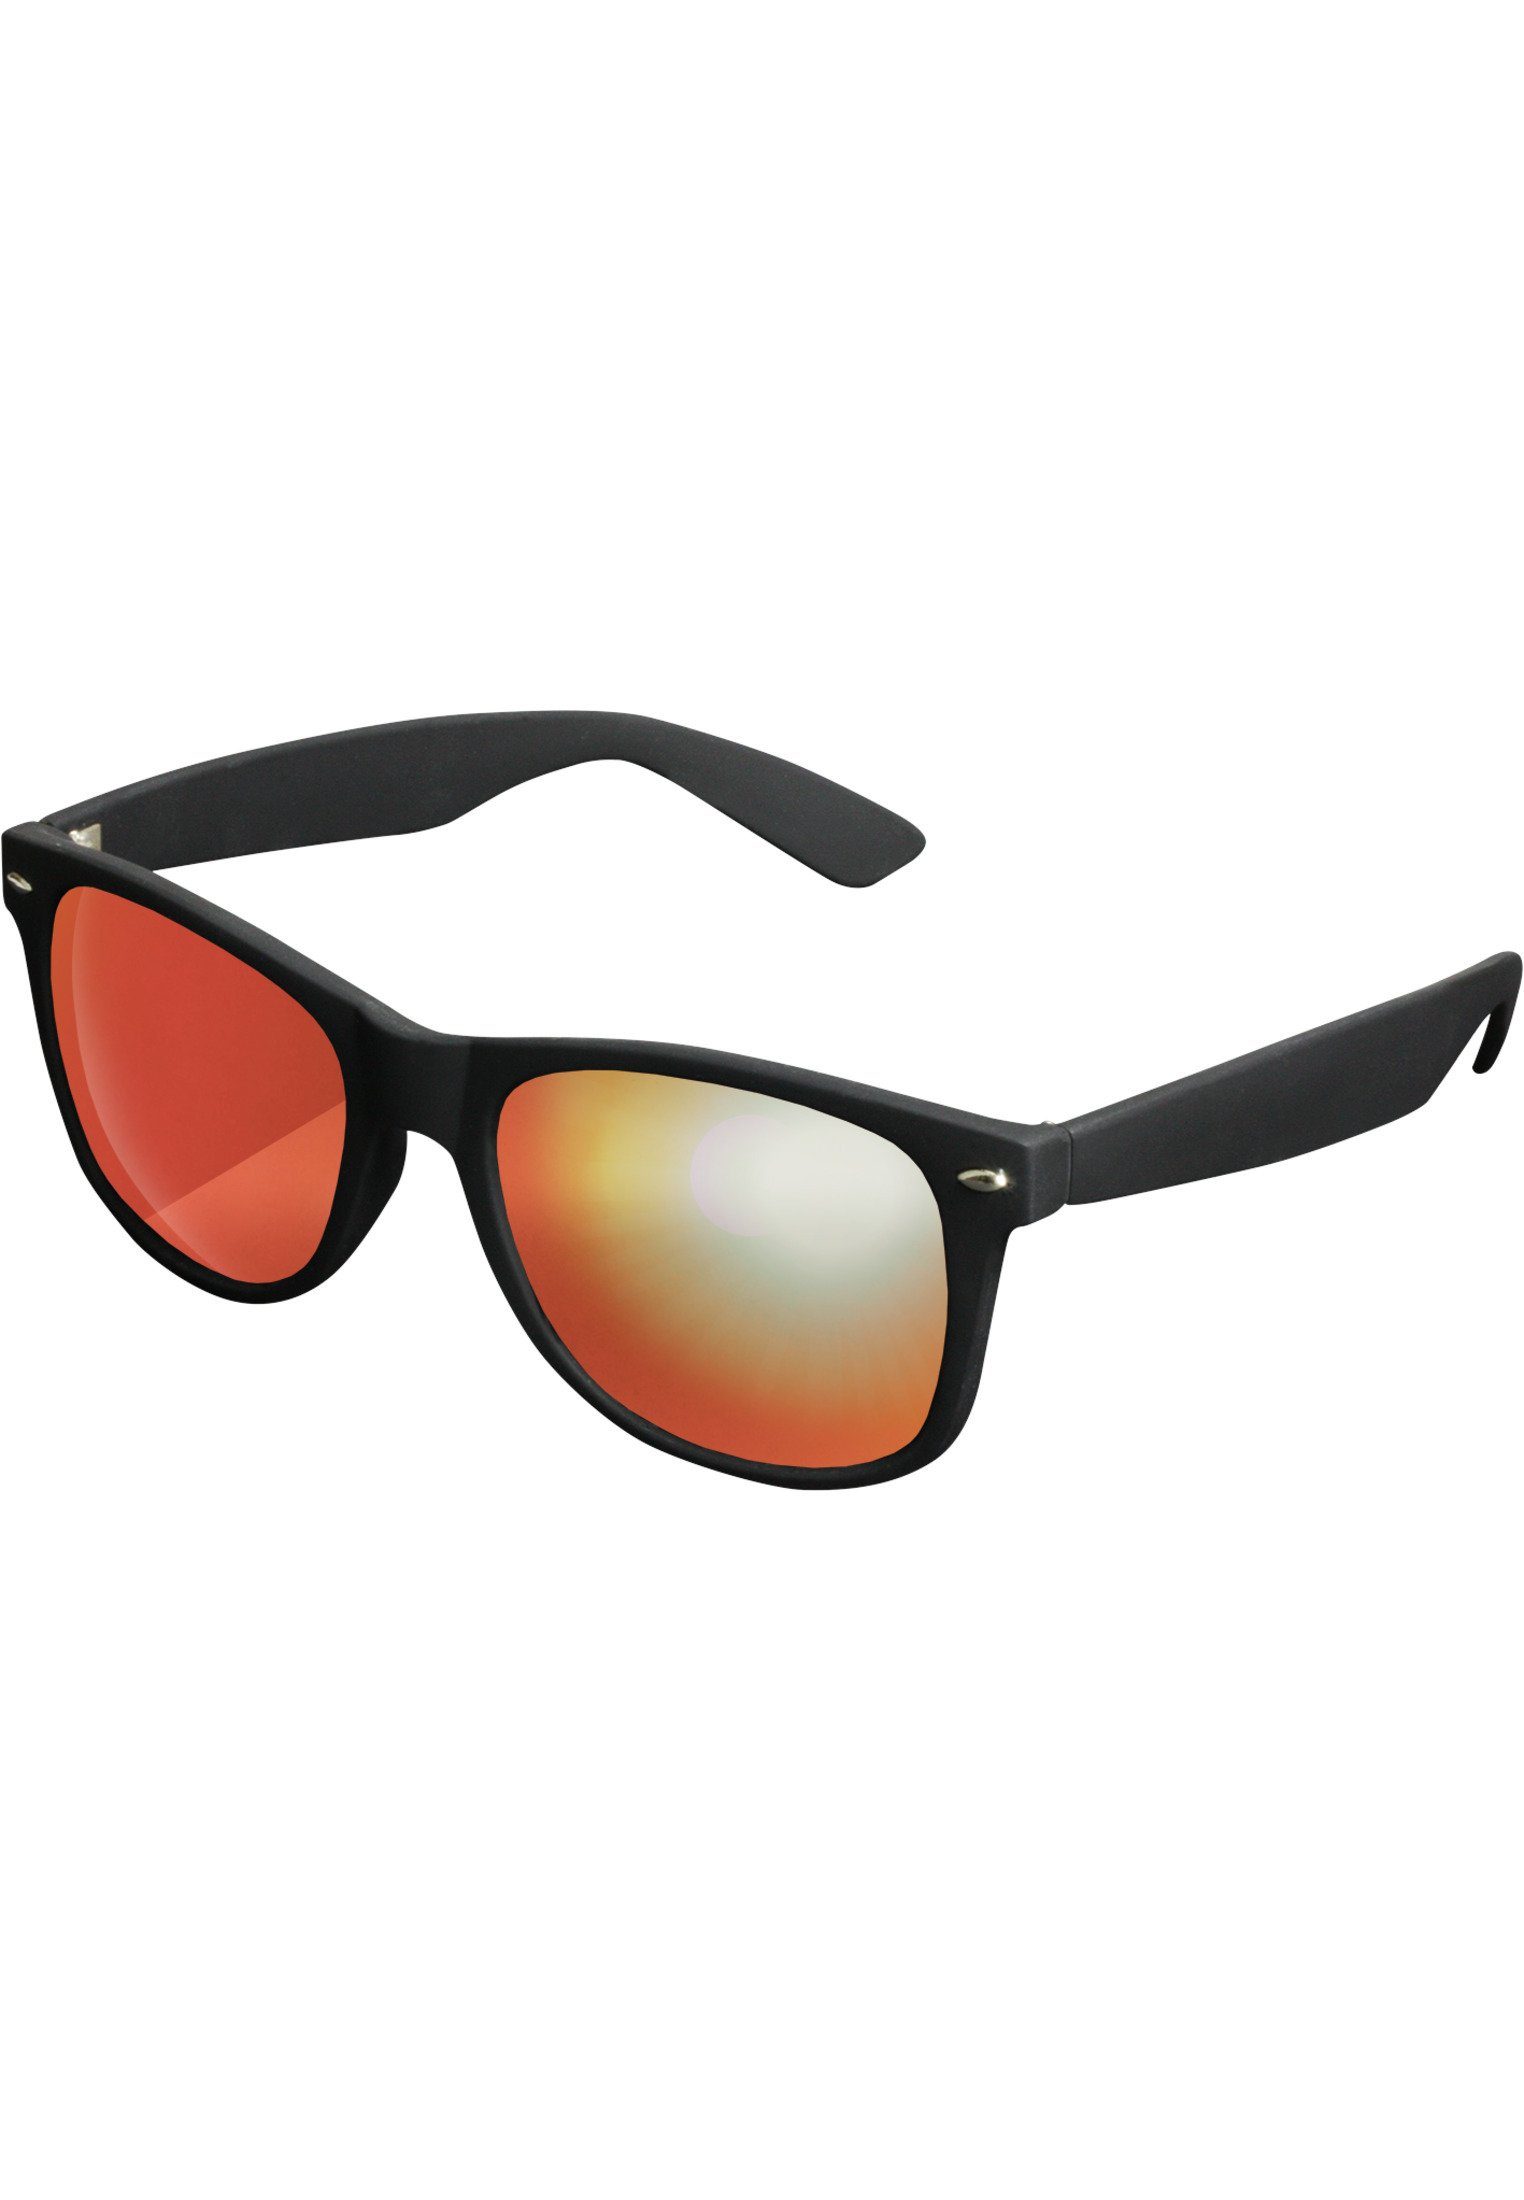 MSTRDS Sonnenbrille Accessoires Mirror blk/red Likoma Sunglasses